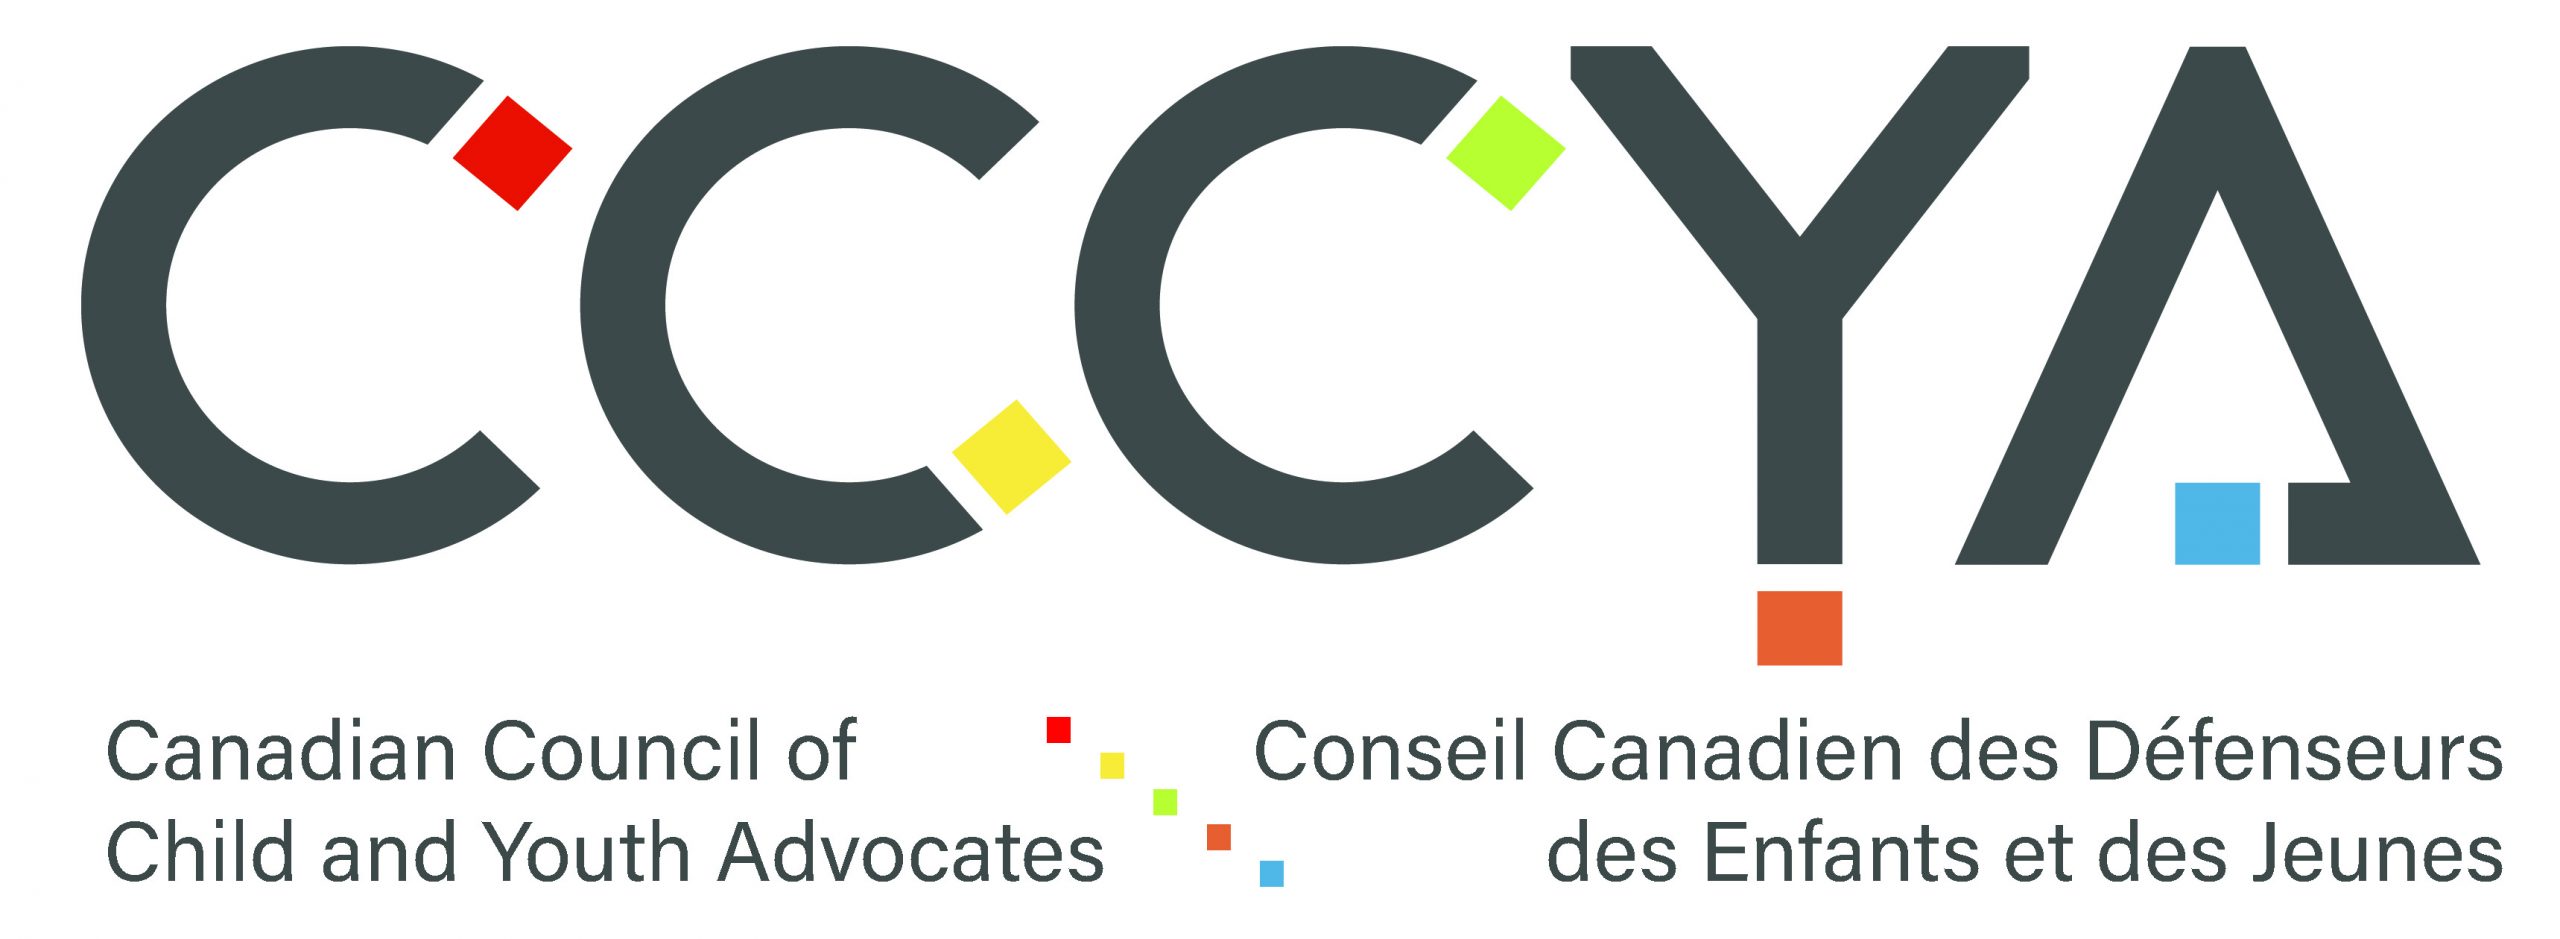 CCCYA logo